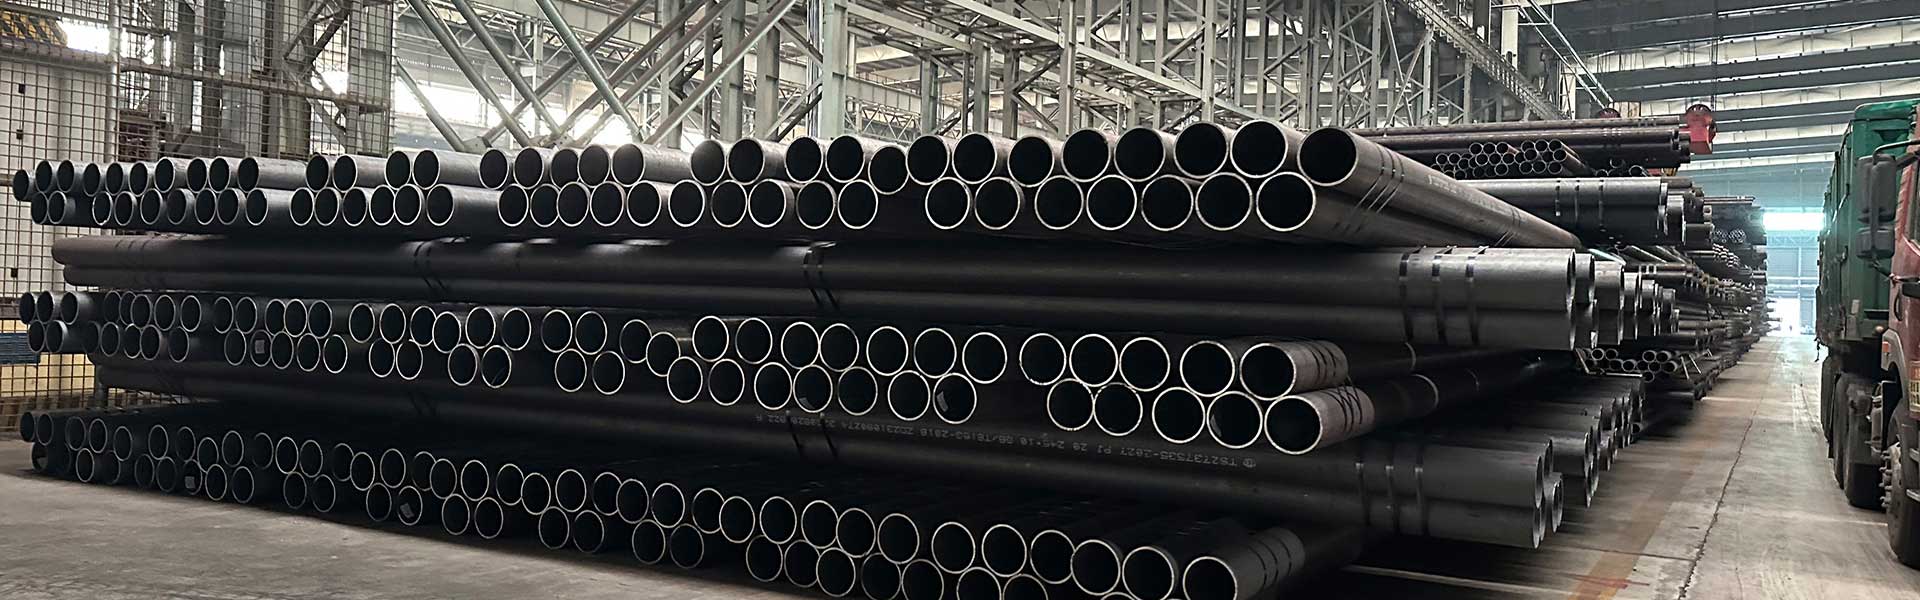 Seamless Steel Pipe, Carbon Steel Pipe, Stainless Steel Pipe, Welded Steel Pipe, Oilfield Tubular Goods, Pipe Fittings